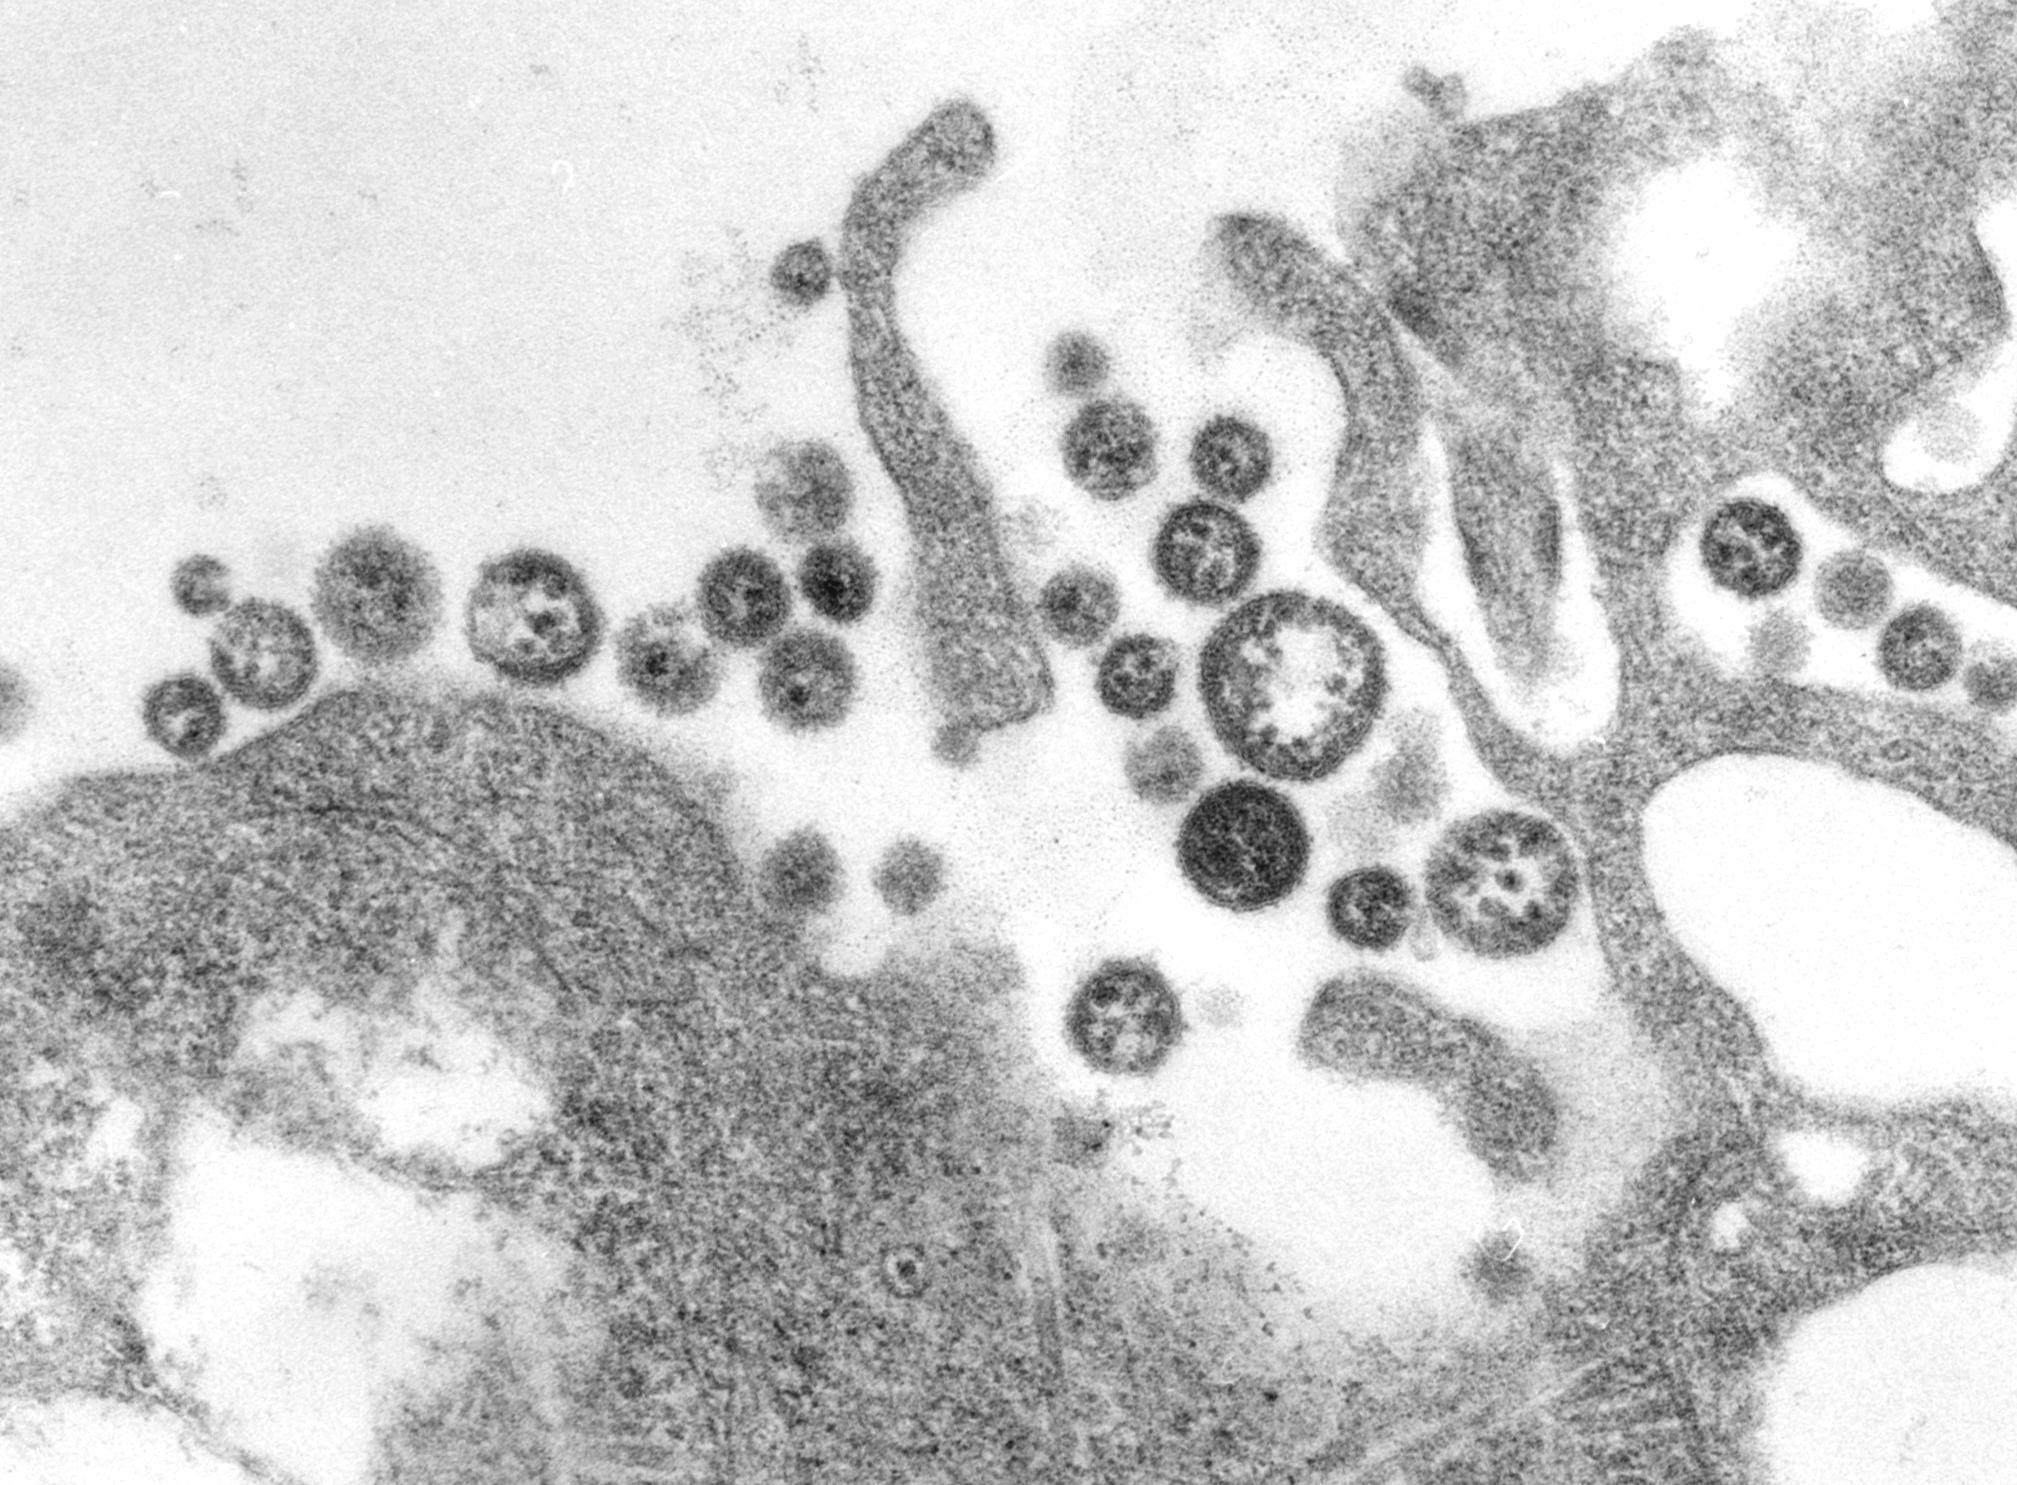 Electron micrograph of lassa virus virions